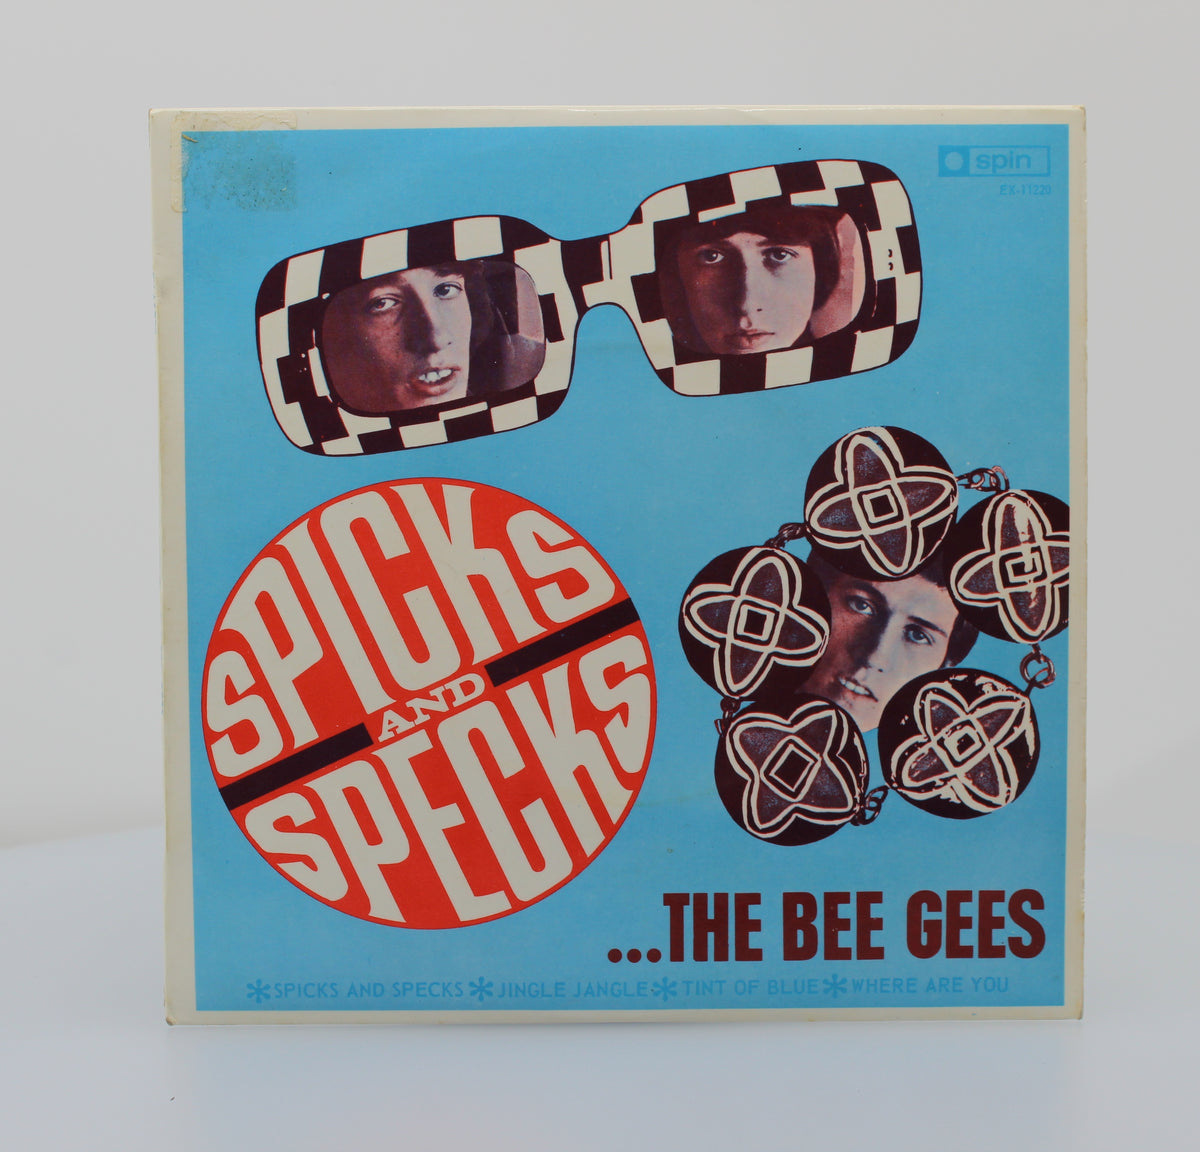 Bee Gees - Spicks And Specks, Vinyl, 7&quot;, 45 RPM, EP, Australia 1966